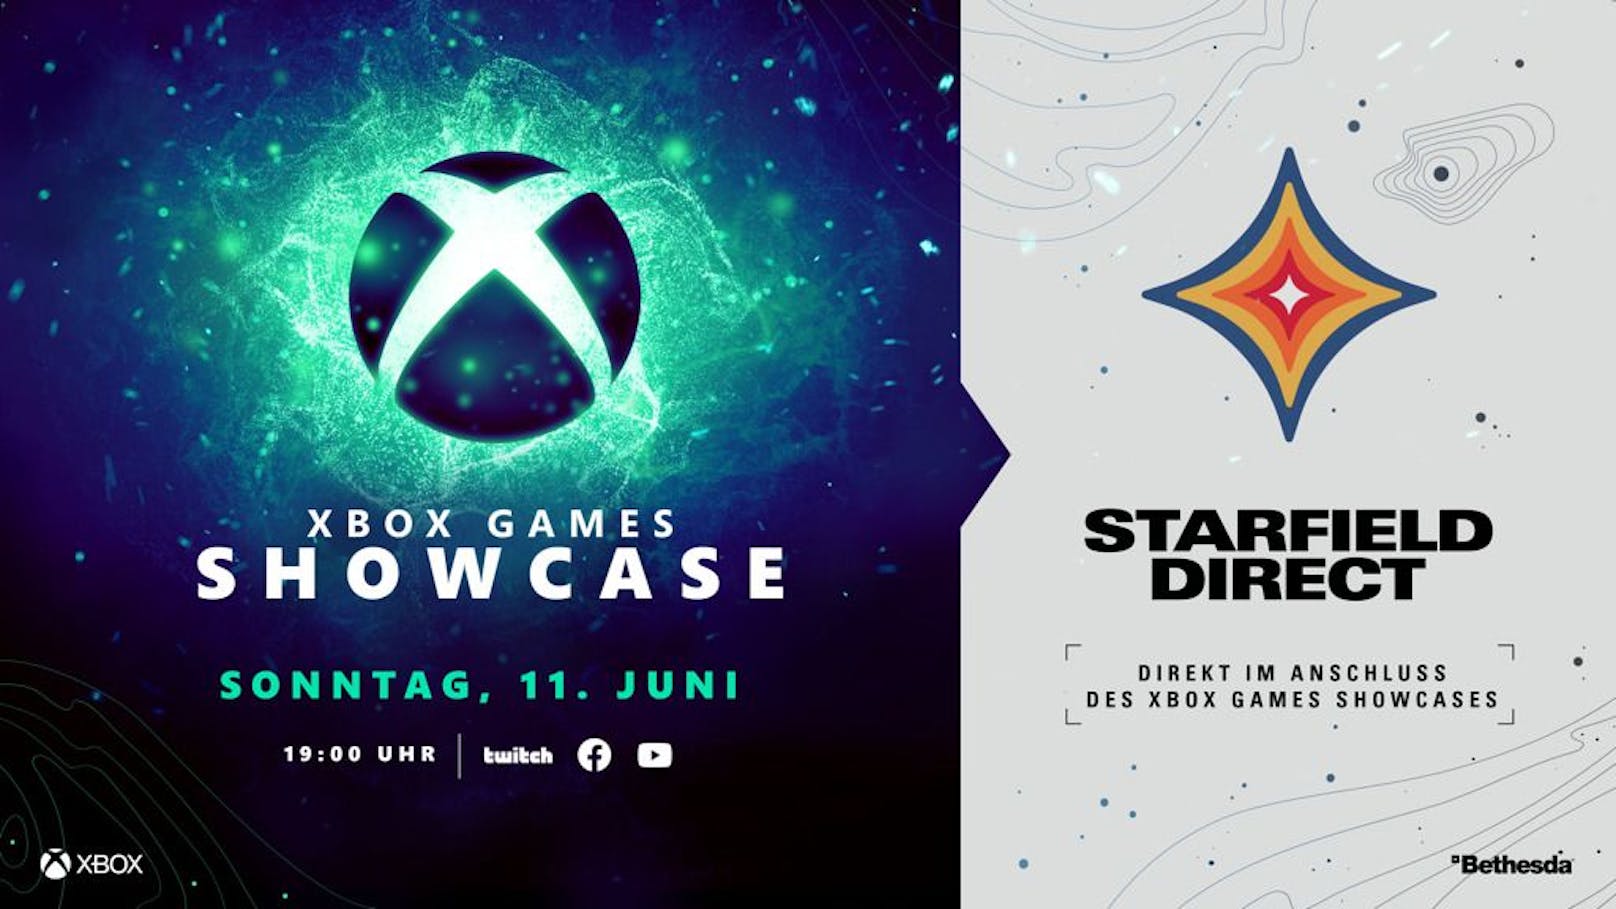 Xbox Games Showcase und Starfield Direct Double Feature am 11. Juni.